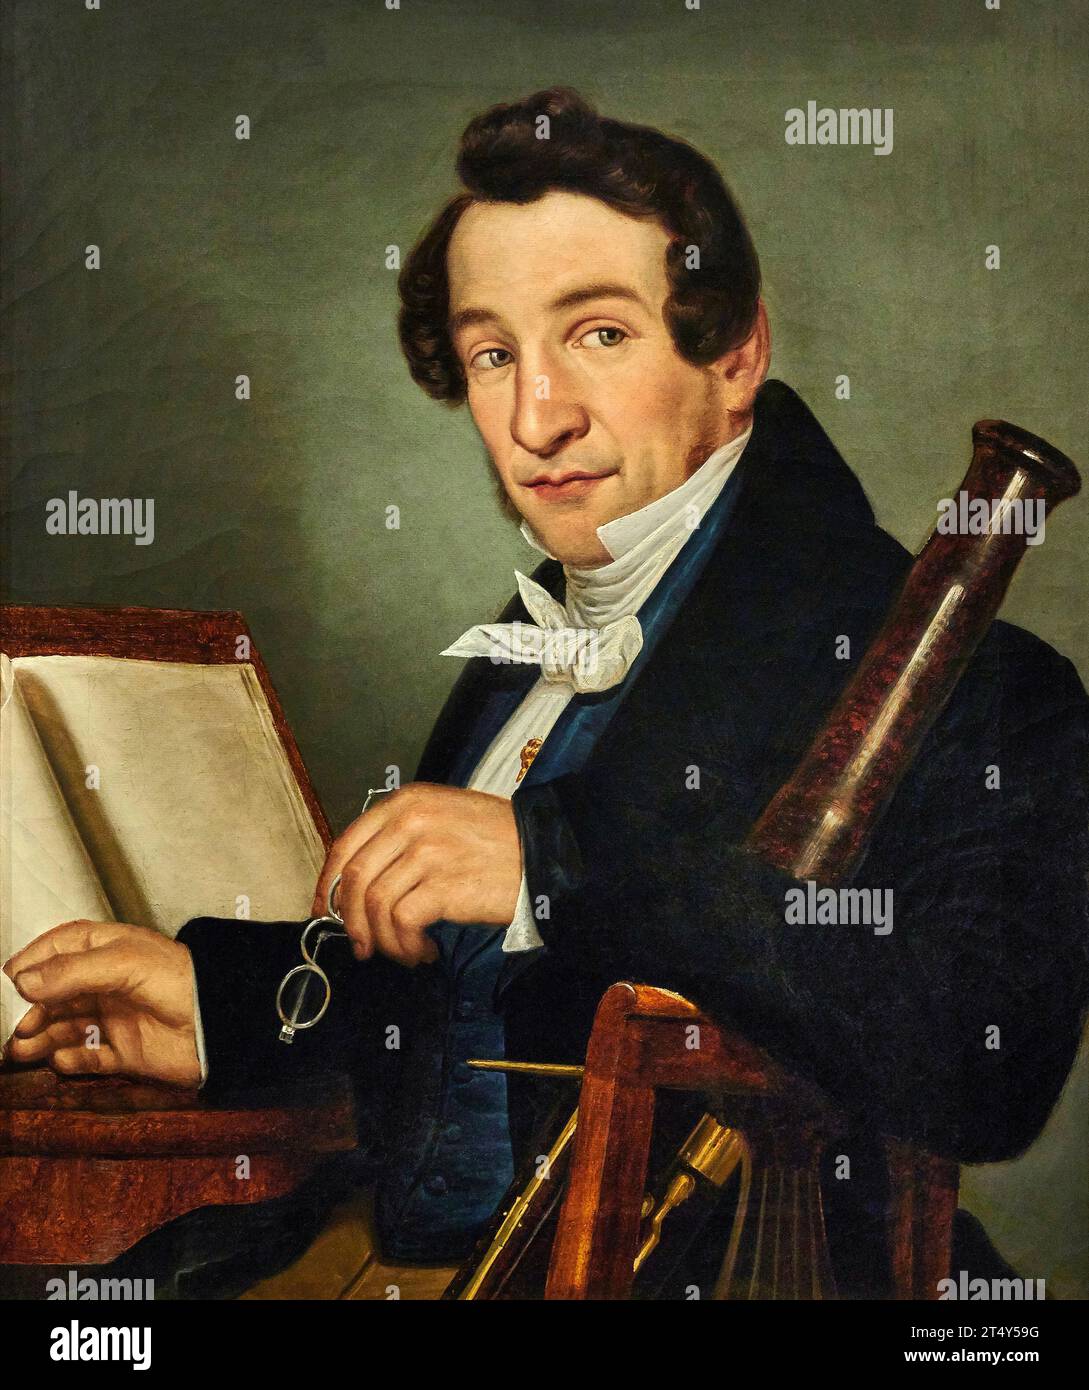 Ritratto del fagottista Giuseppe Tamplini - olio su tela - Luigi Trecourt - 1845 - Roma, Galleria Carlo Virgilio  & C. Stock Photo